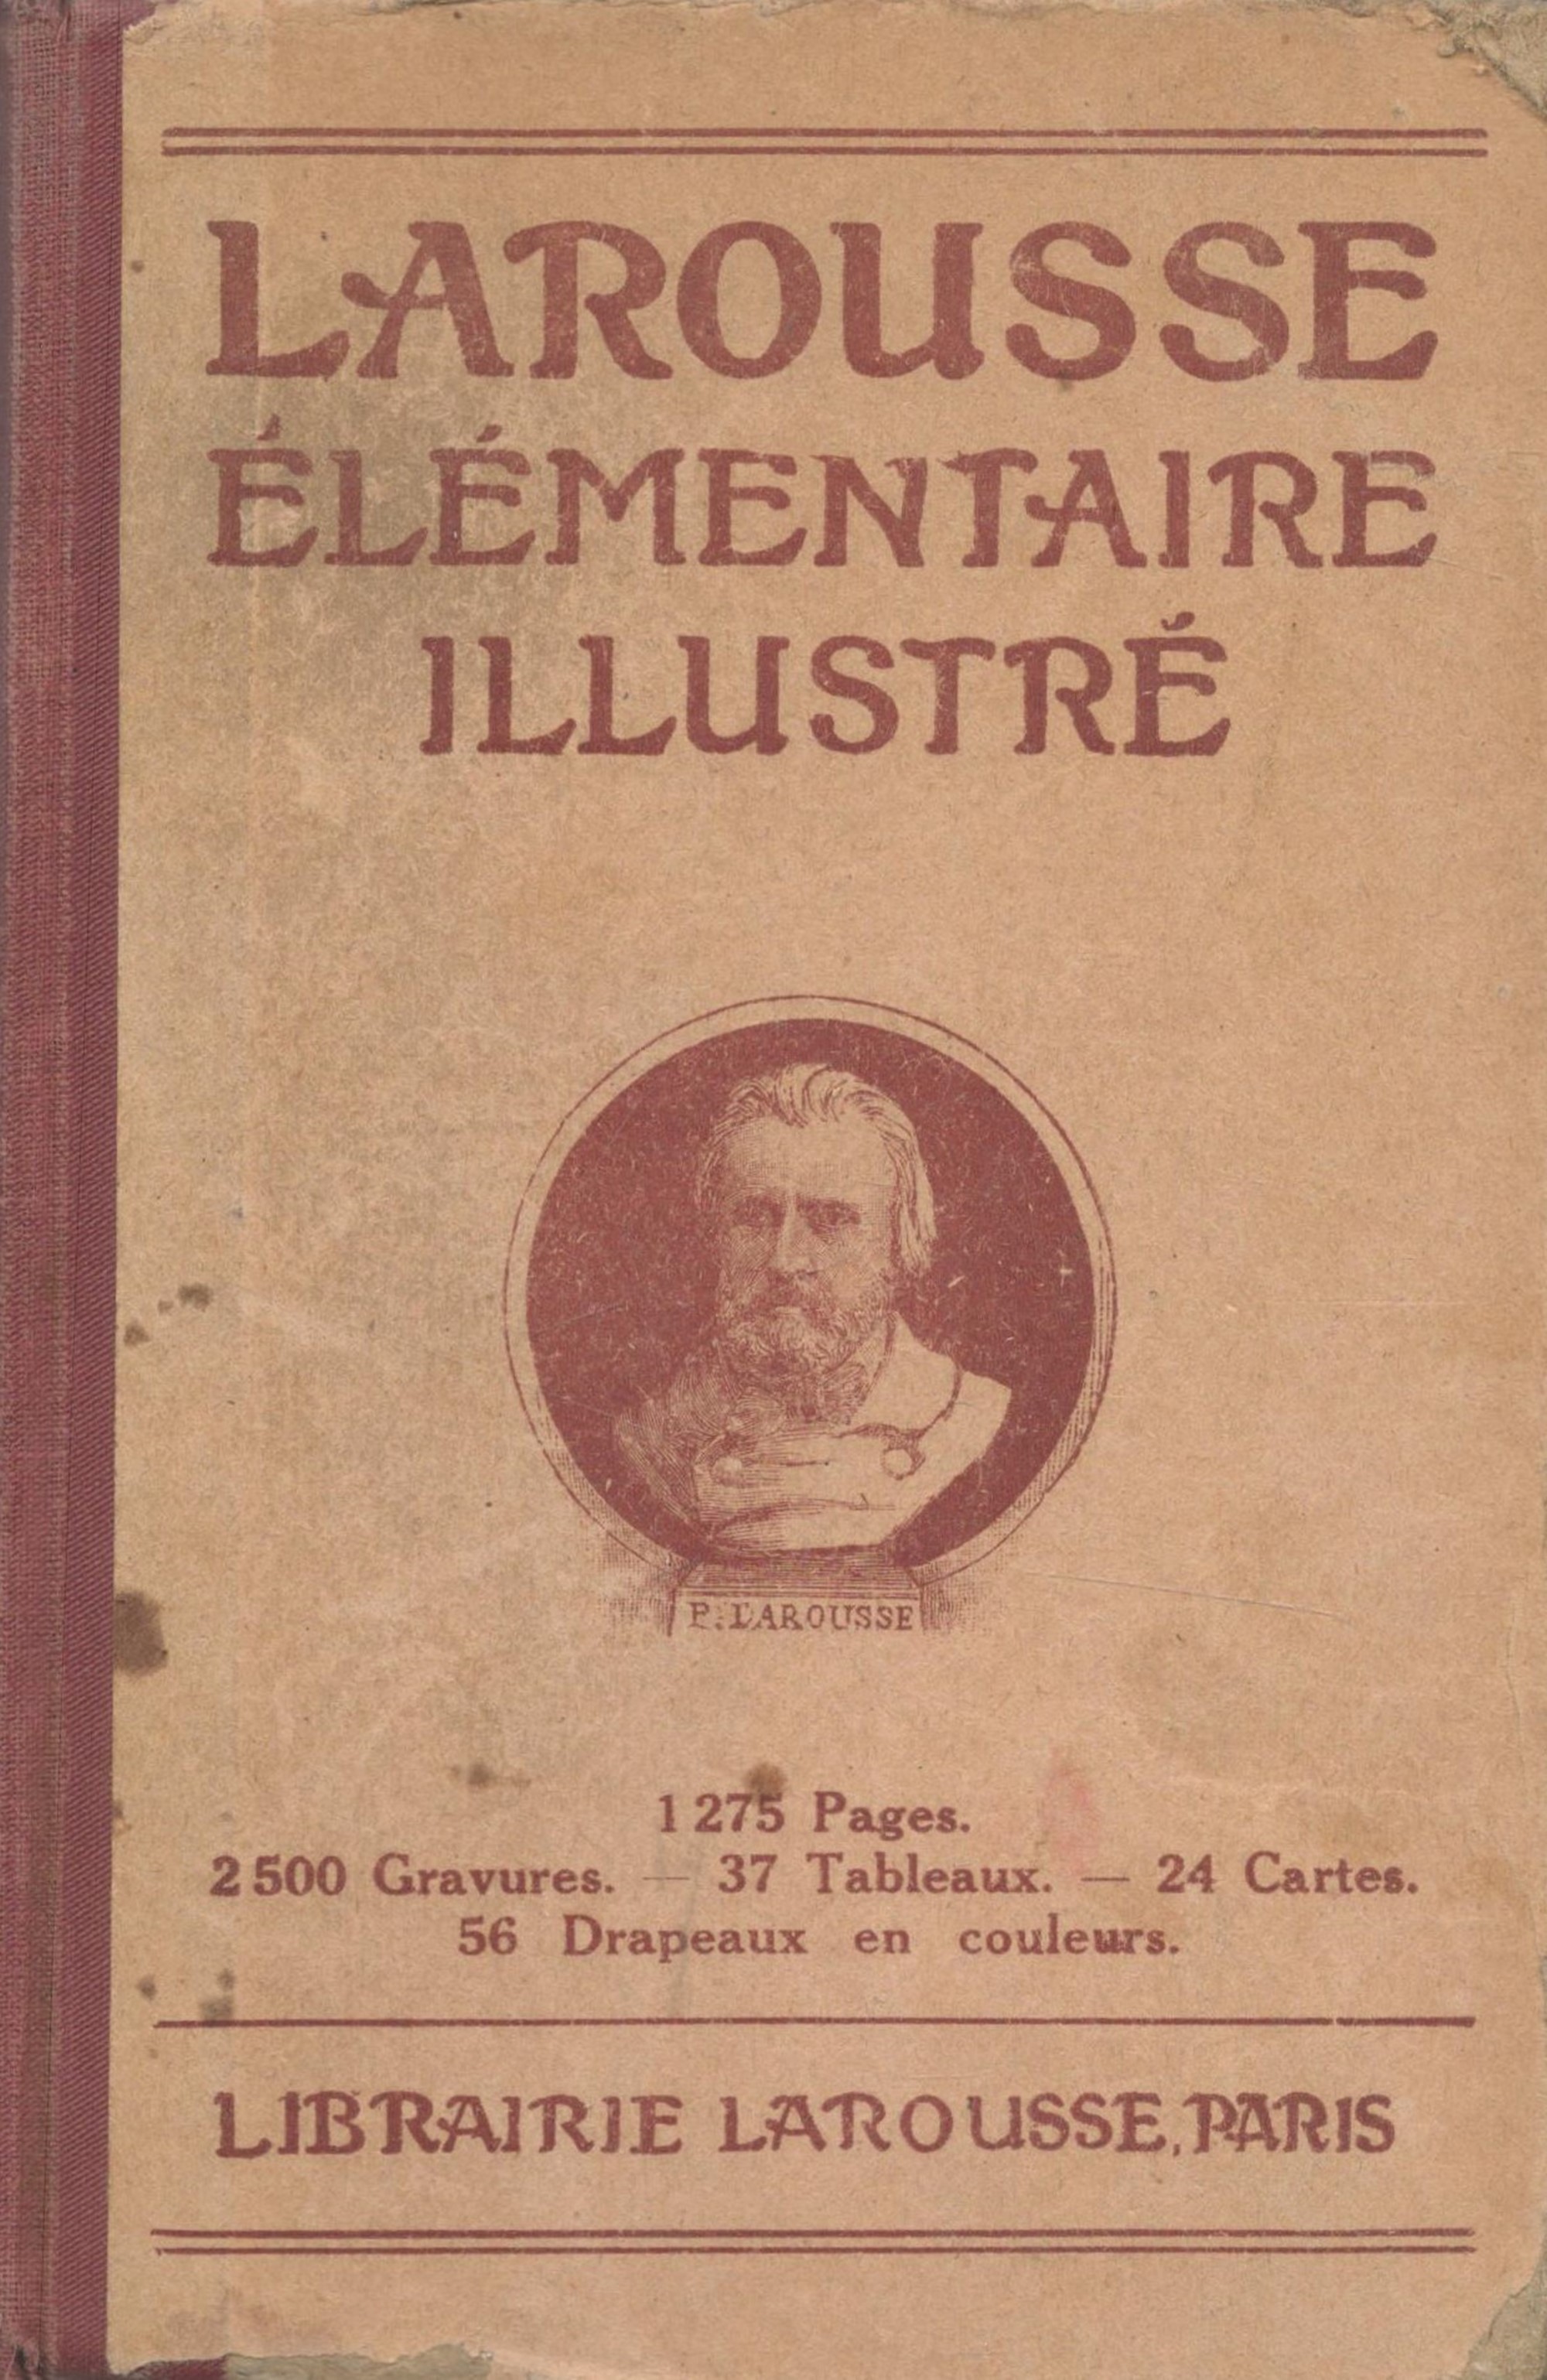 Larousse Elementaire Illustre Soixante-Quatrieme Edition (64th edition) date unknown Hardback Book